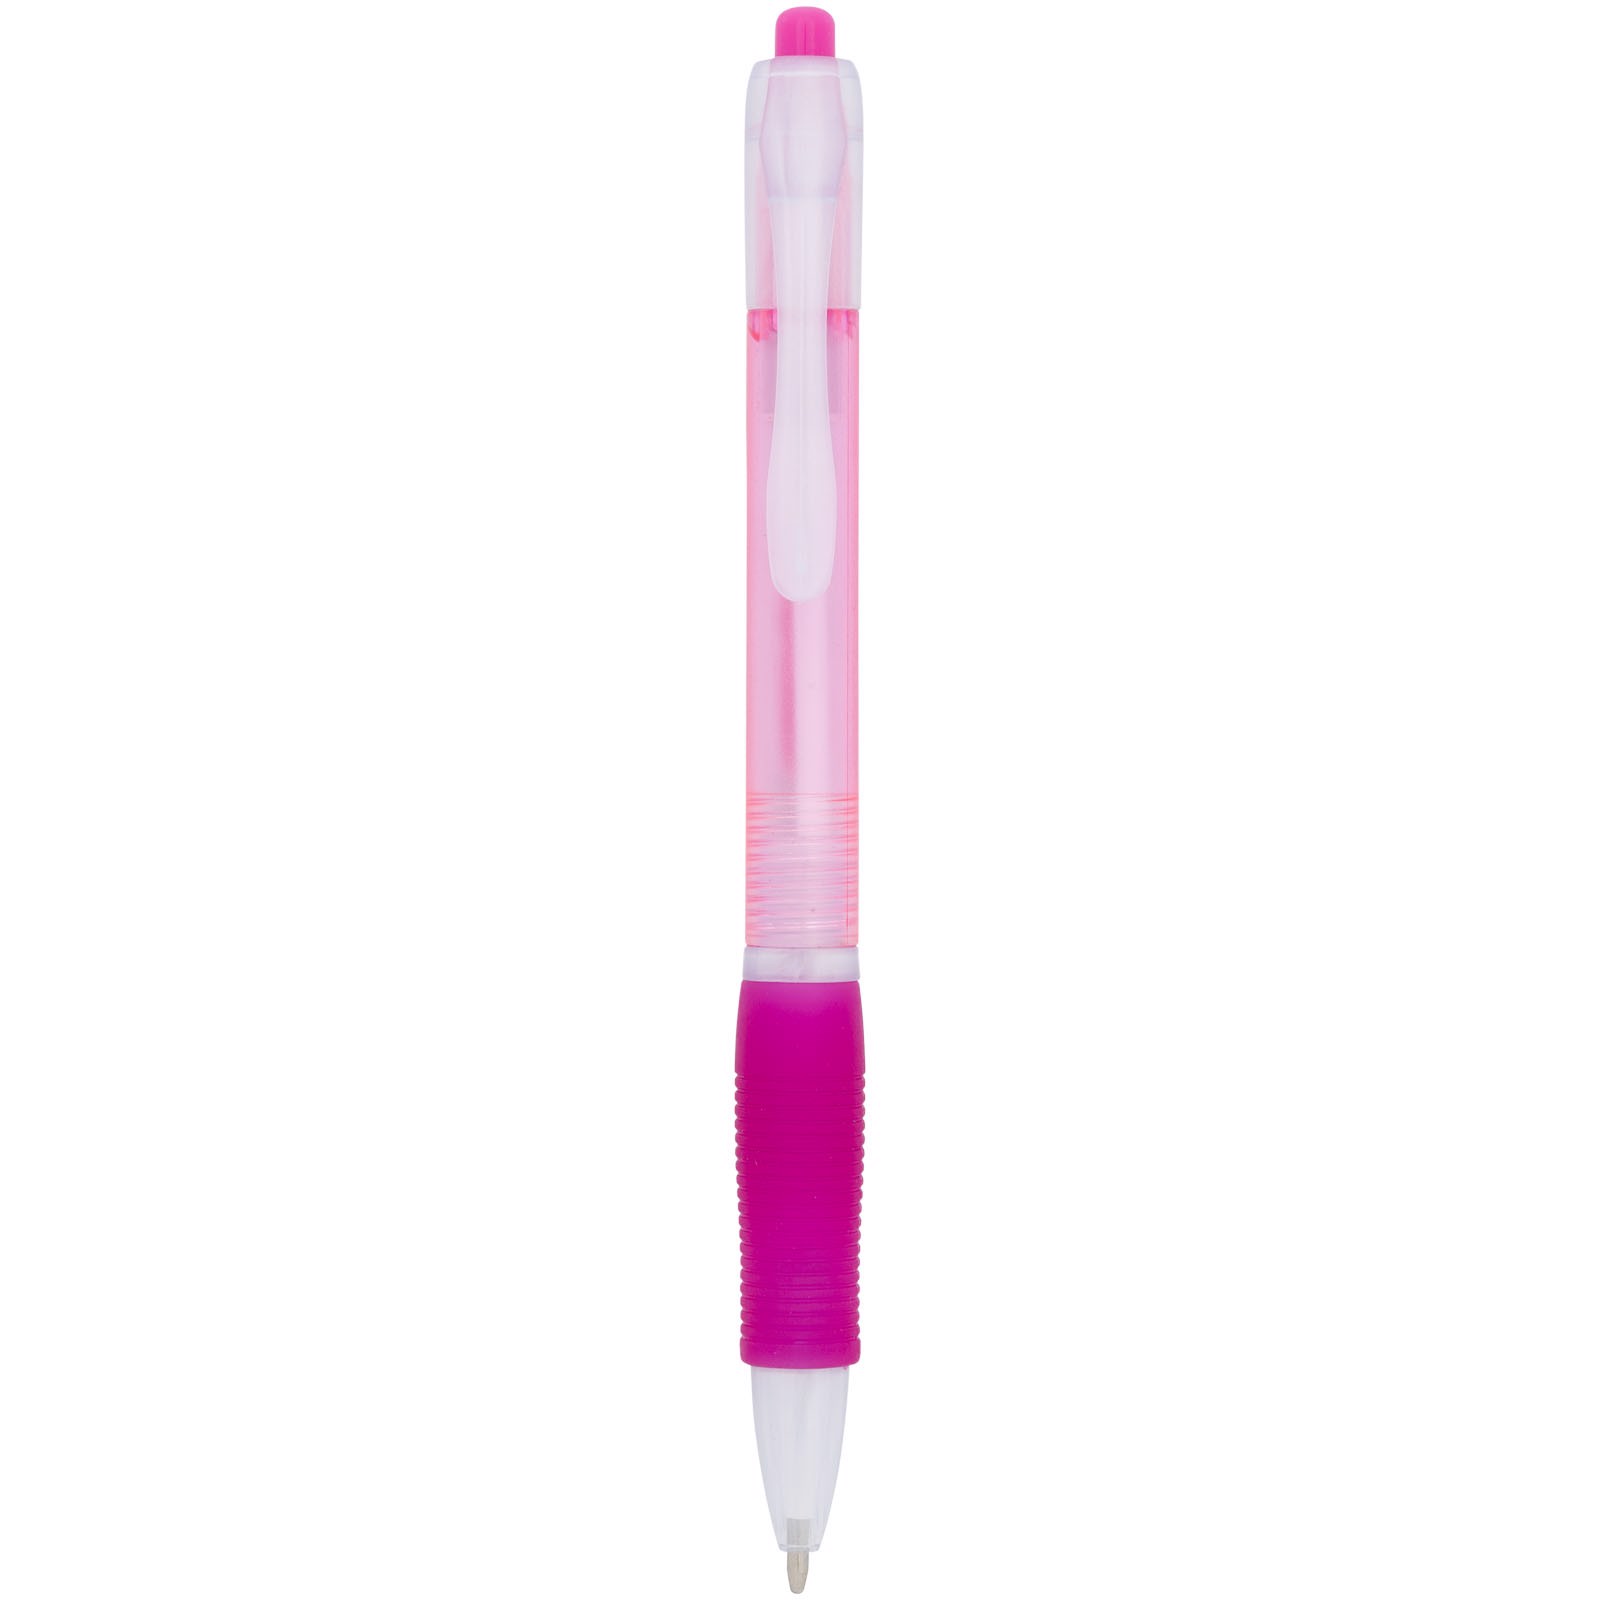 Trim ballpoint pen - Pink